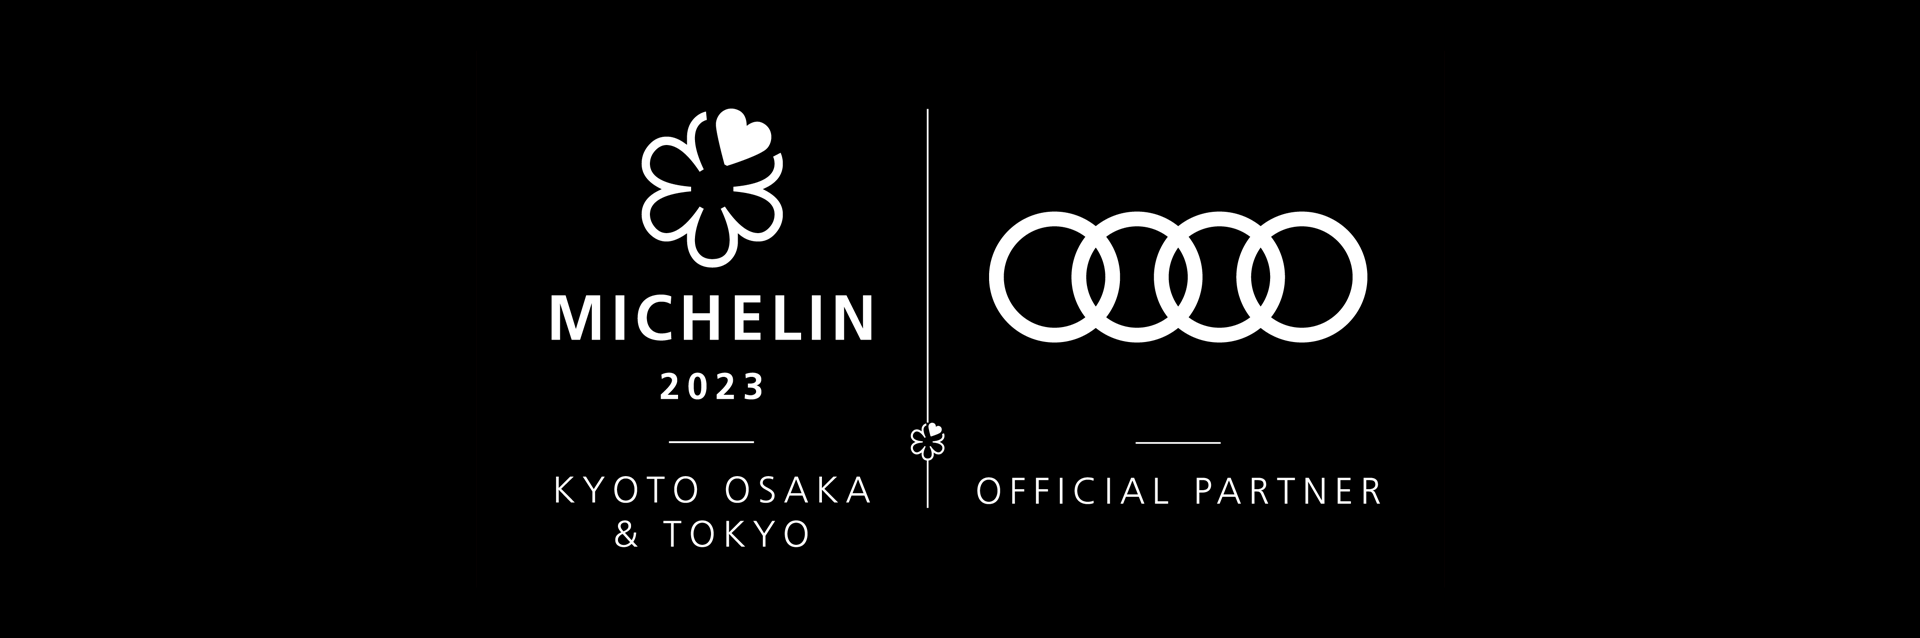 MICHELIN 2023 KYOTO OSAKA & OKYO OFIFICIAL PARTNER Audi